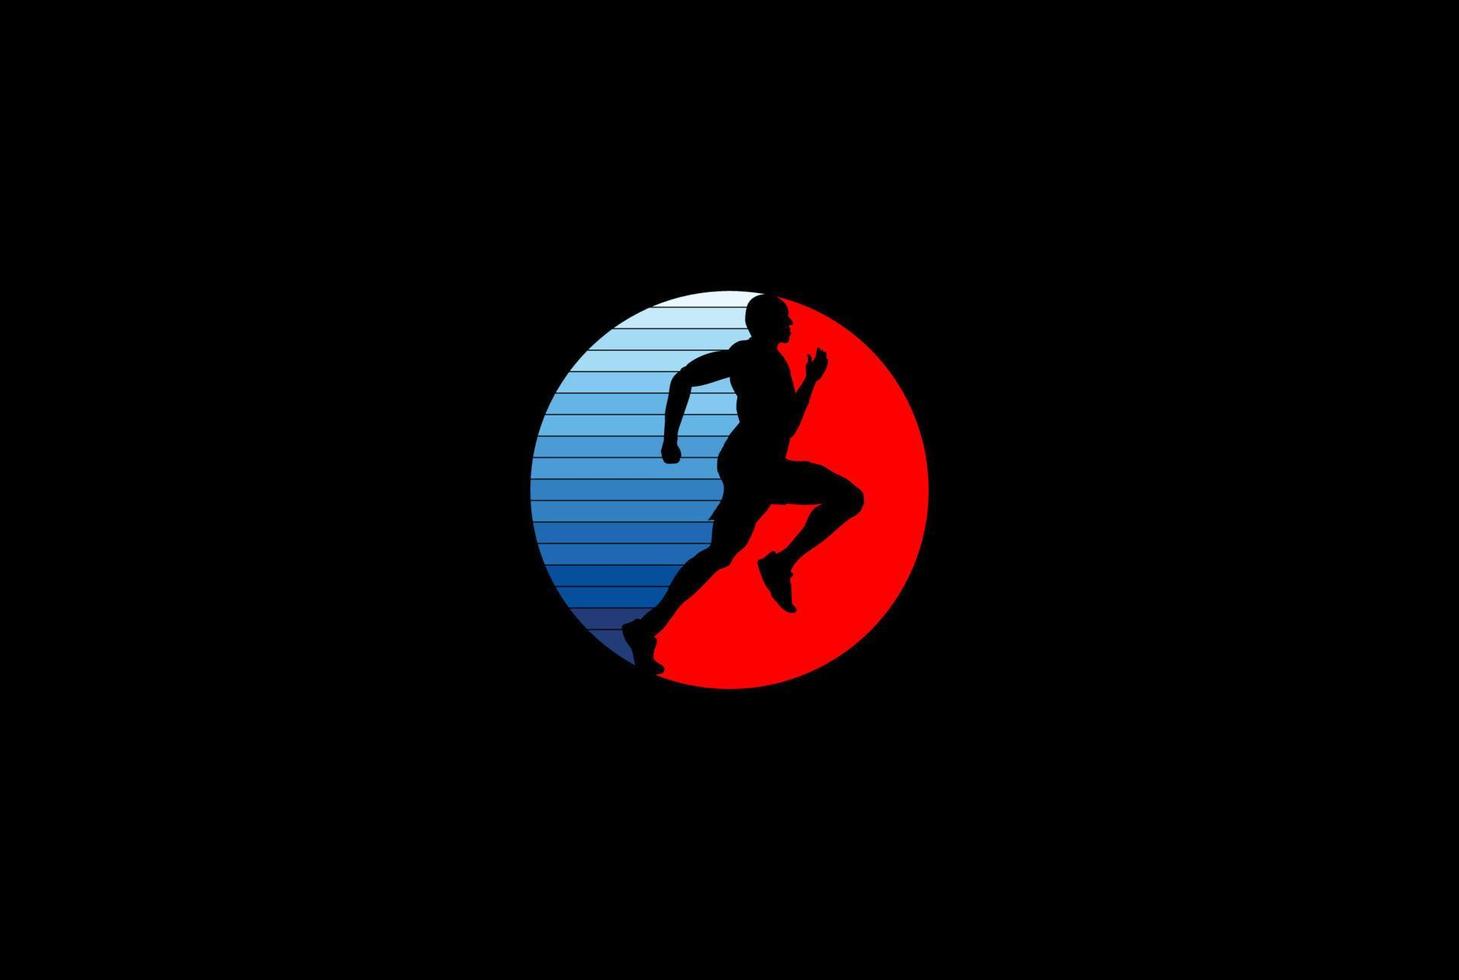 Simple Minimalist Man Human Run Sprint for Athletic Sport Logo Design Vector